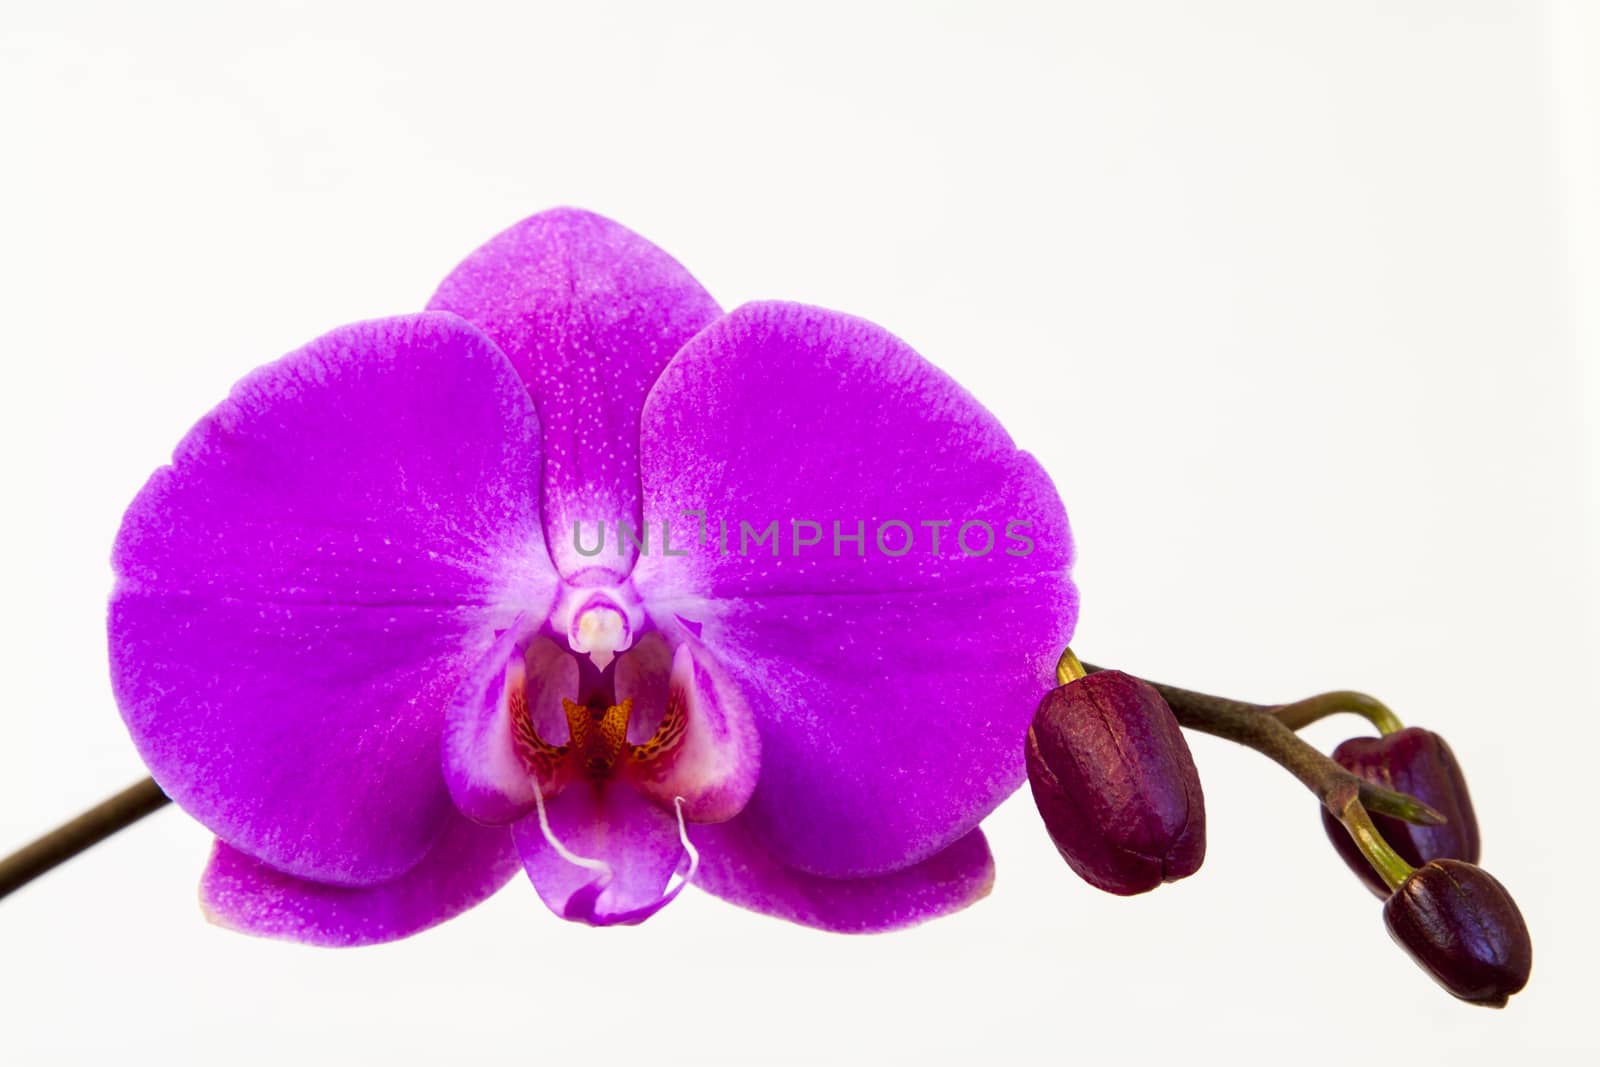 Purple Orchid by nicobernieri